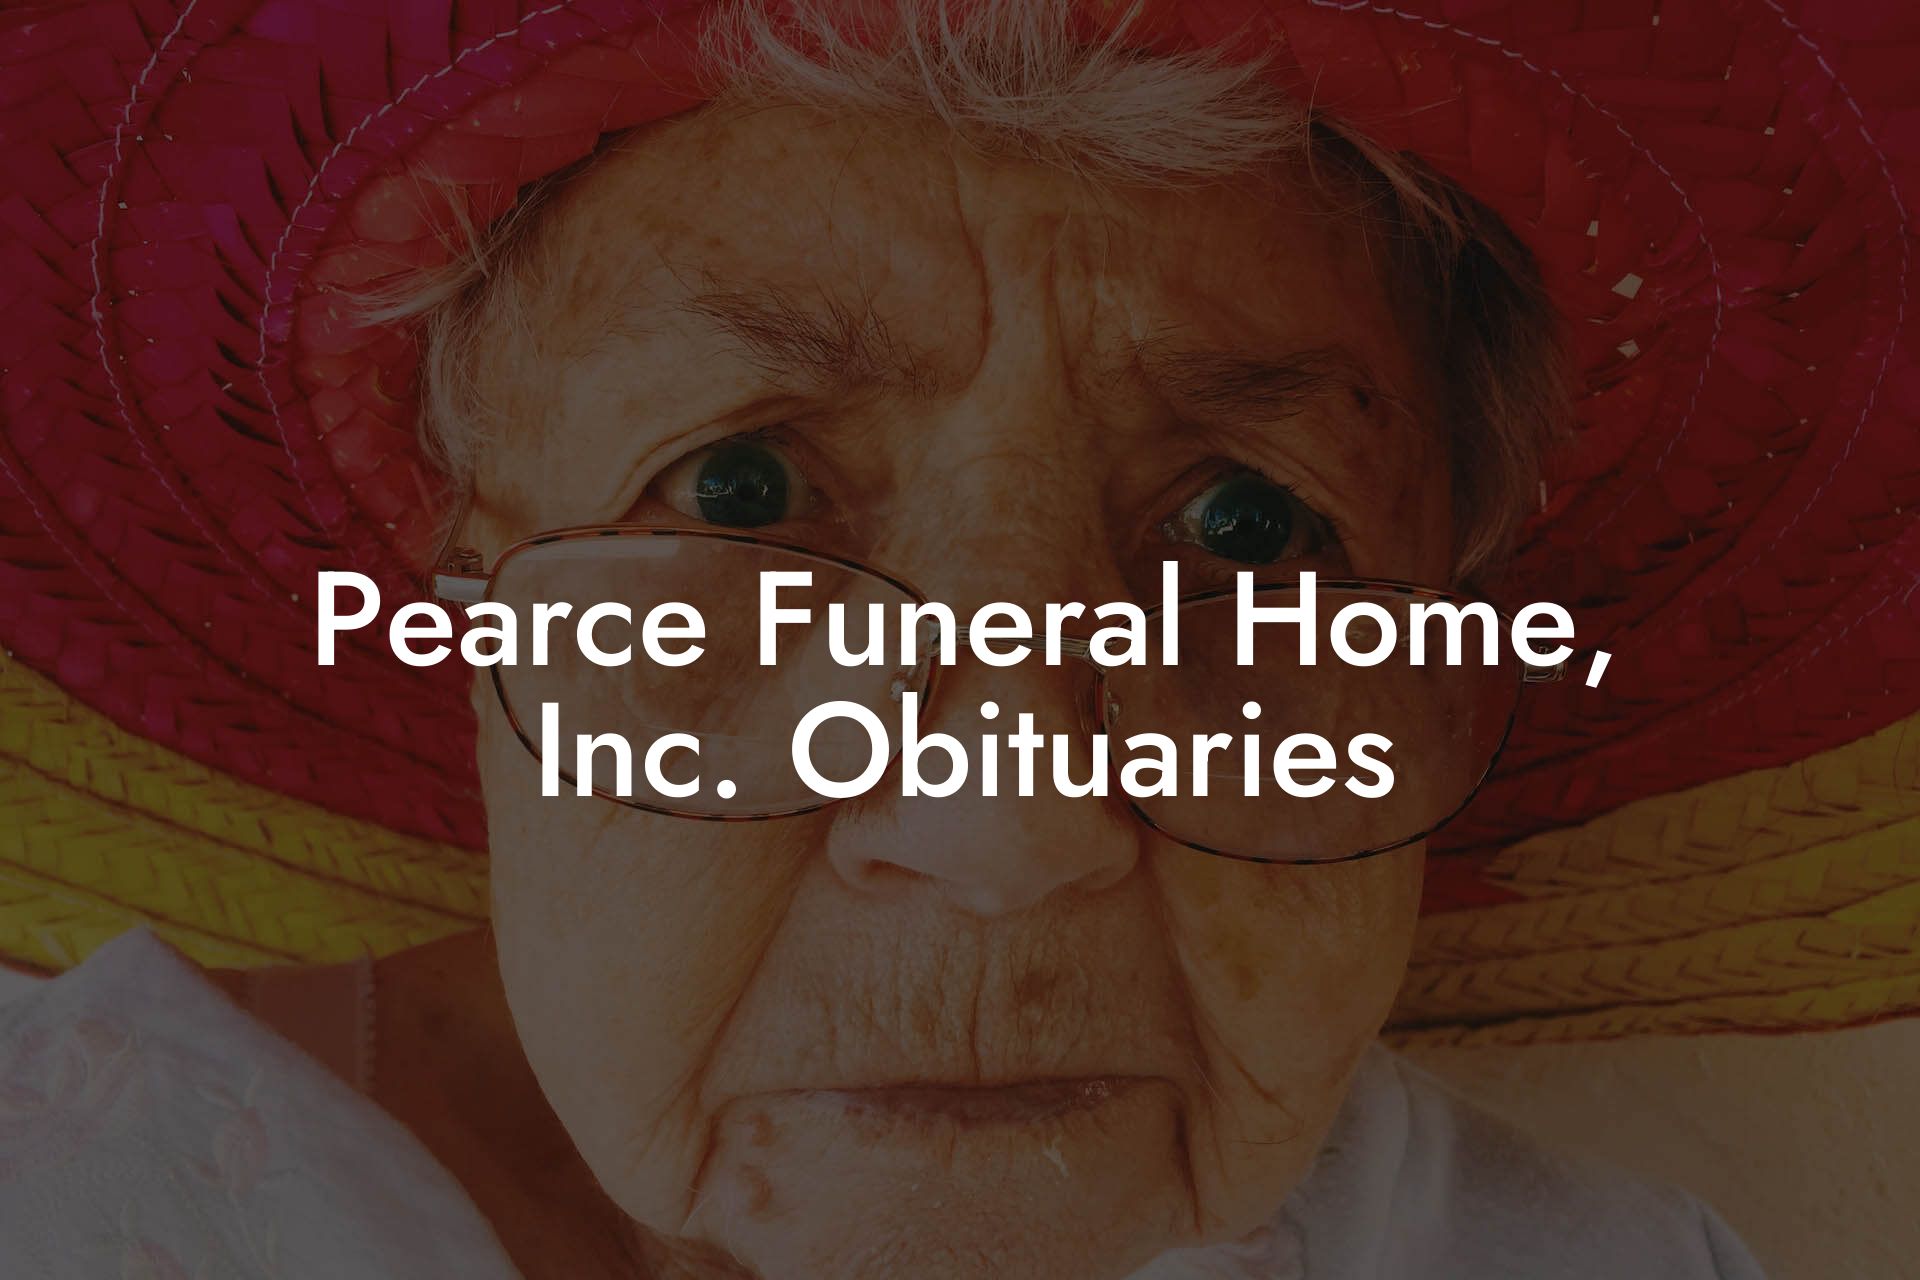 Pearce Funeral Home, Inc. Obituaries